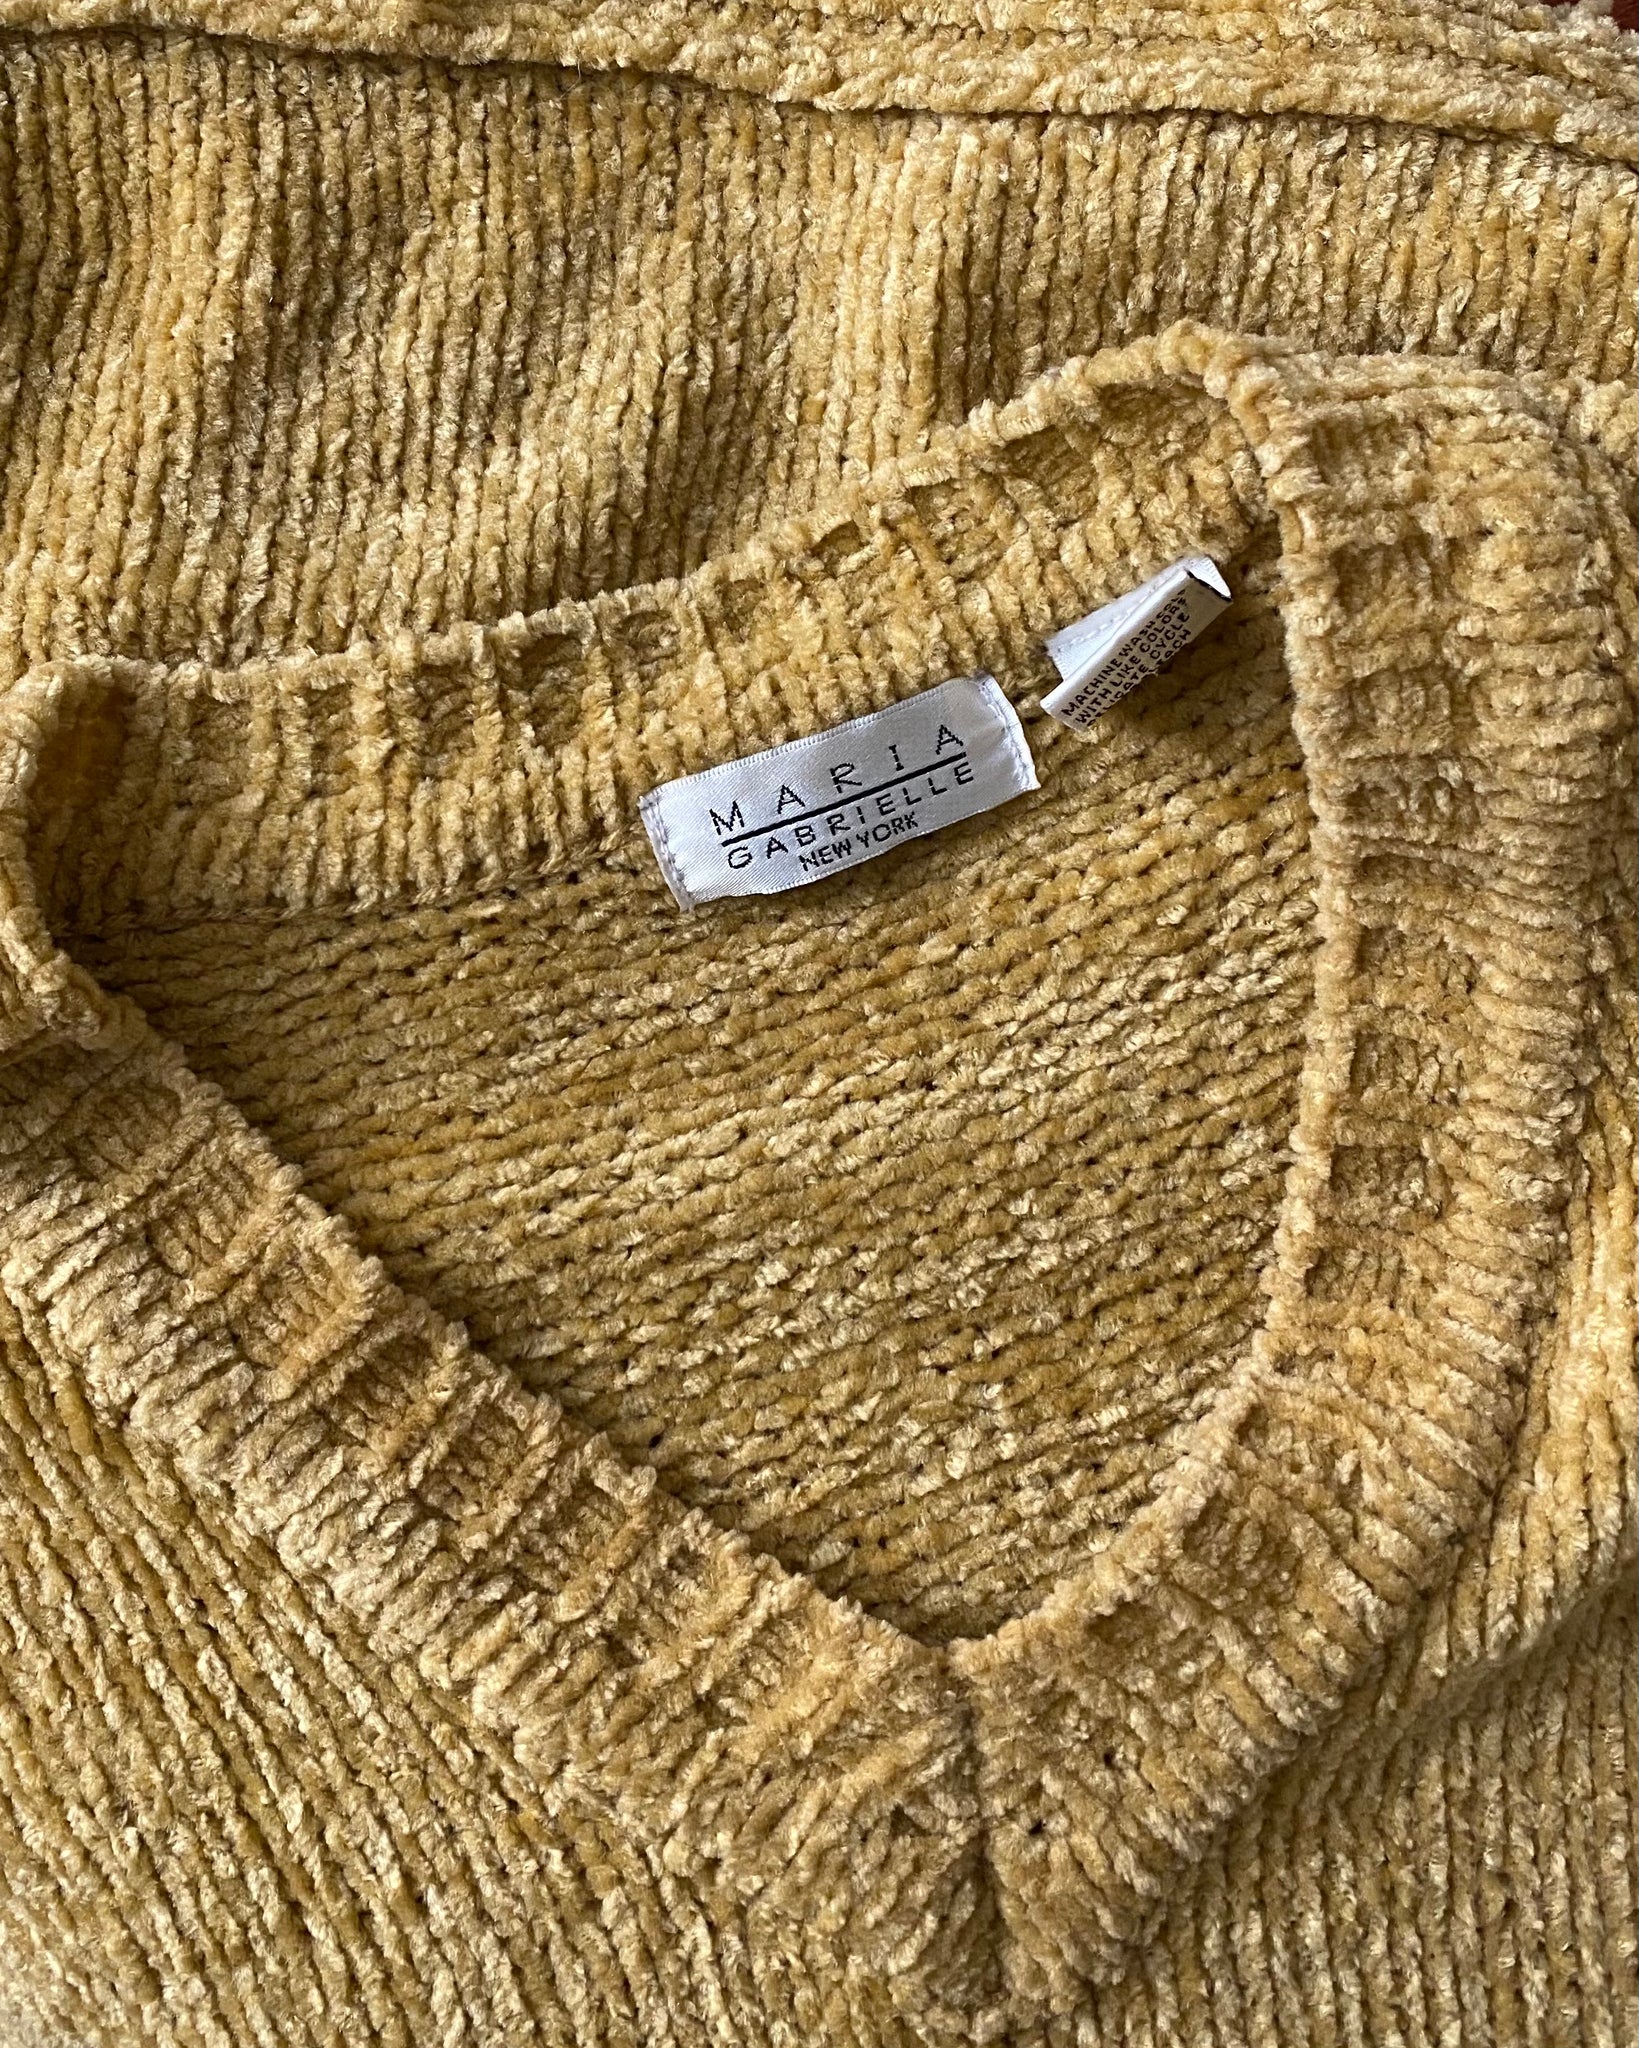 90s Gold Knit Fringe Sweater (Size L)